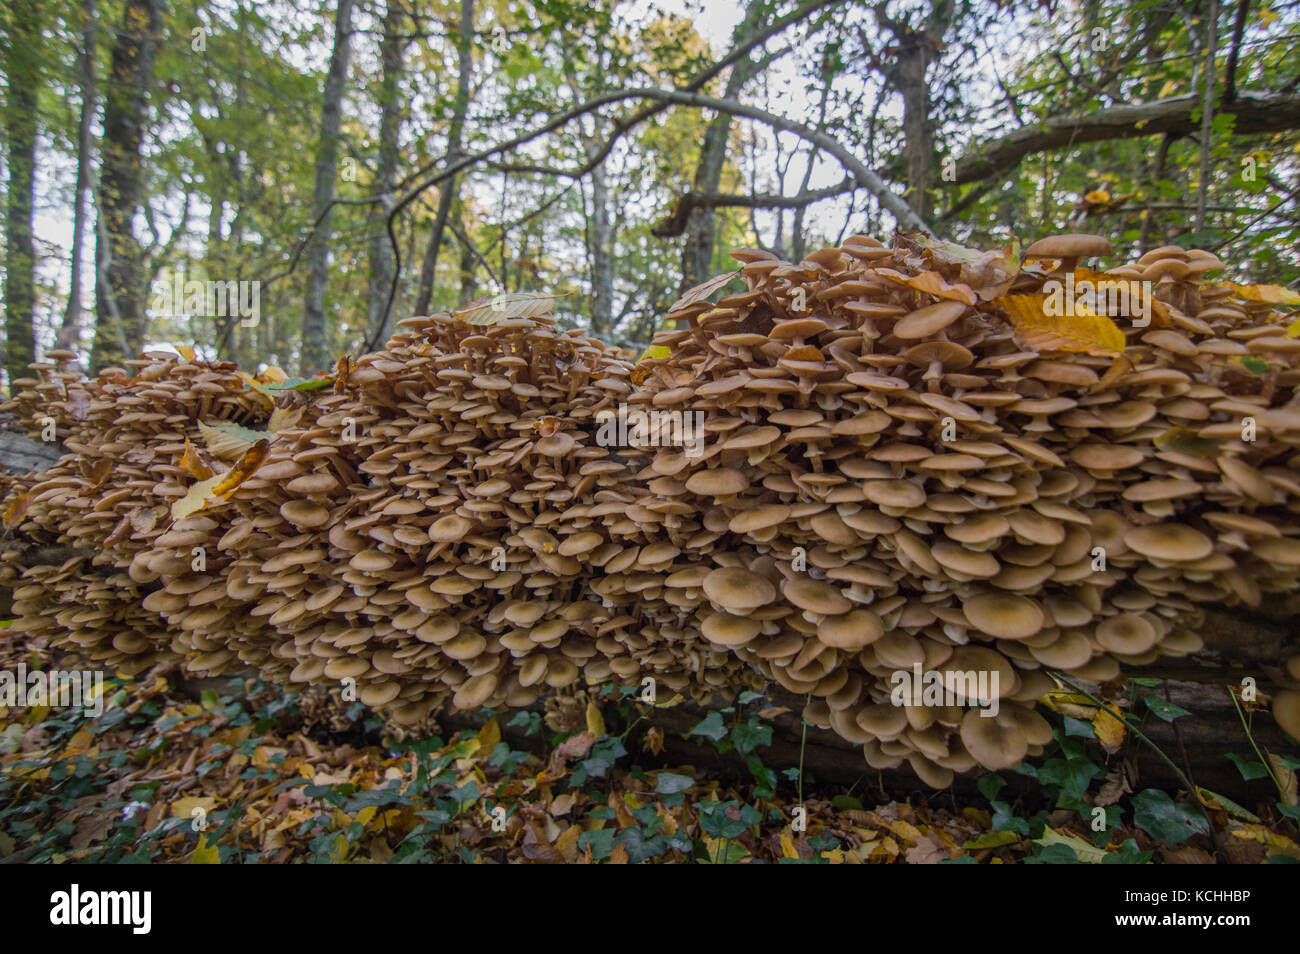 Forest mushrooms en masse, covering a fallen tree in autumn. Stock Photo